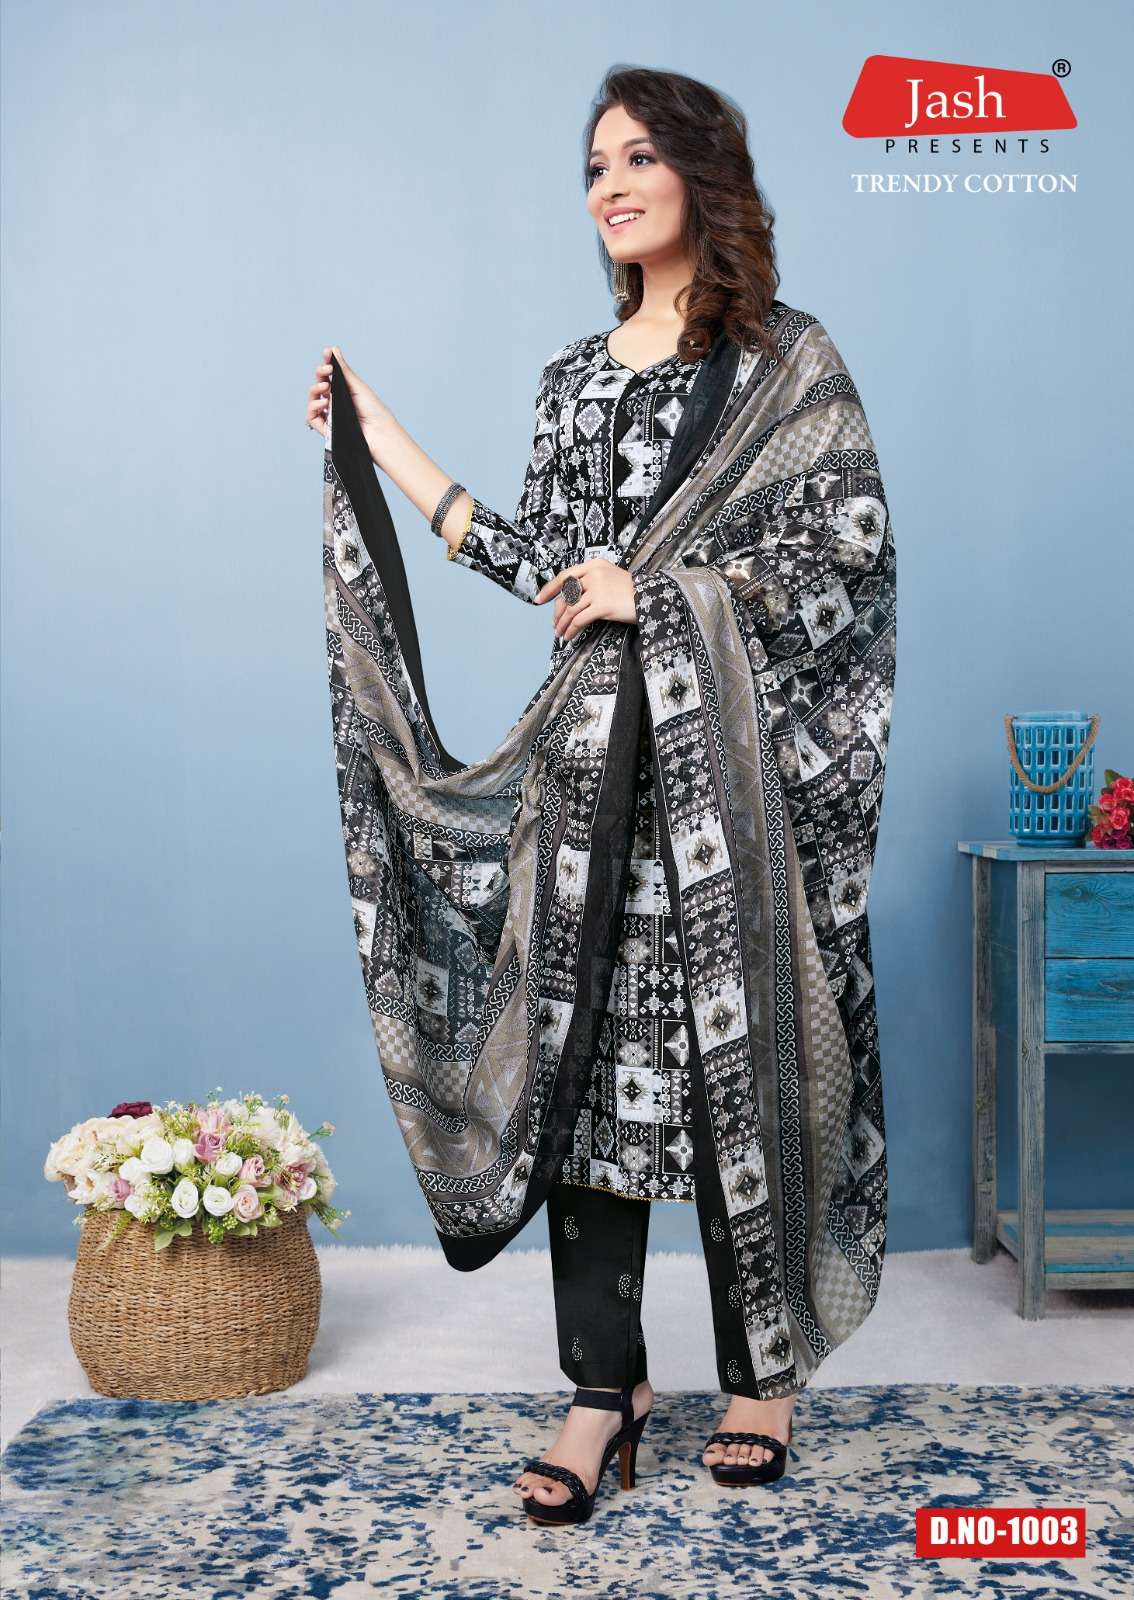 Jash Trendy Cotton Vol 1 Ready Made Cotton Dress Collection manufacturer in delhi